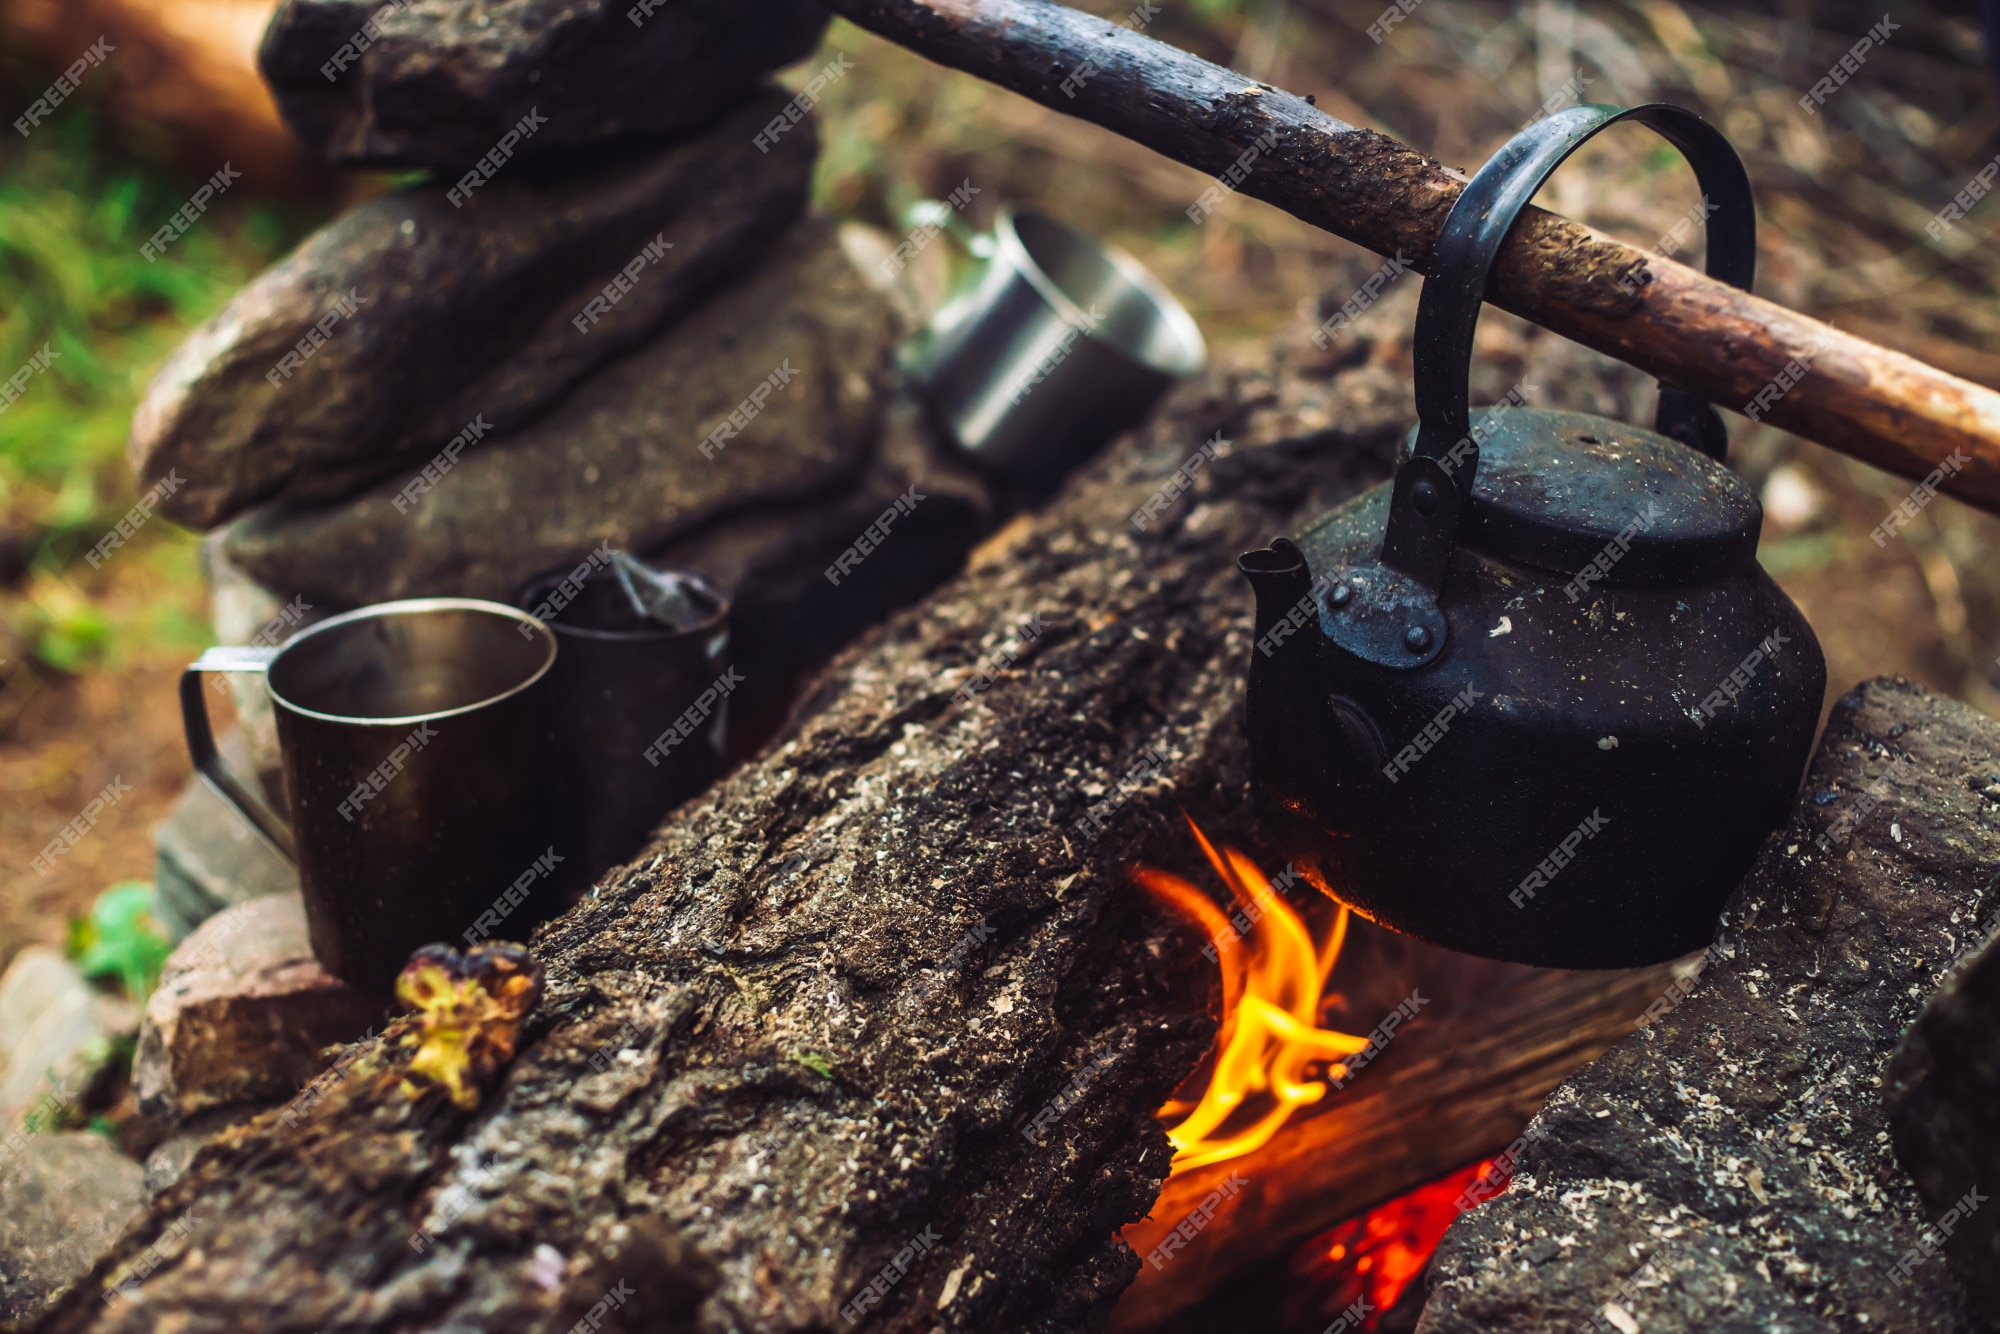 https://img.freepik.com/premium-photo/boiling-tea-kettle-bonfire-with-large-firewood-tea-drinking-open-air-active-outdoor-recreation-camping-dusk-romantic-warm-atmosphere-twilight-nature-active-rest-metal-mug_102332-1728.jpg?w=2000